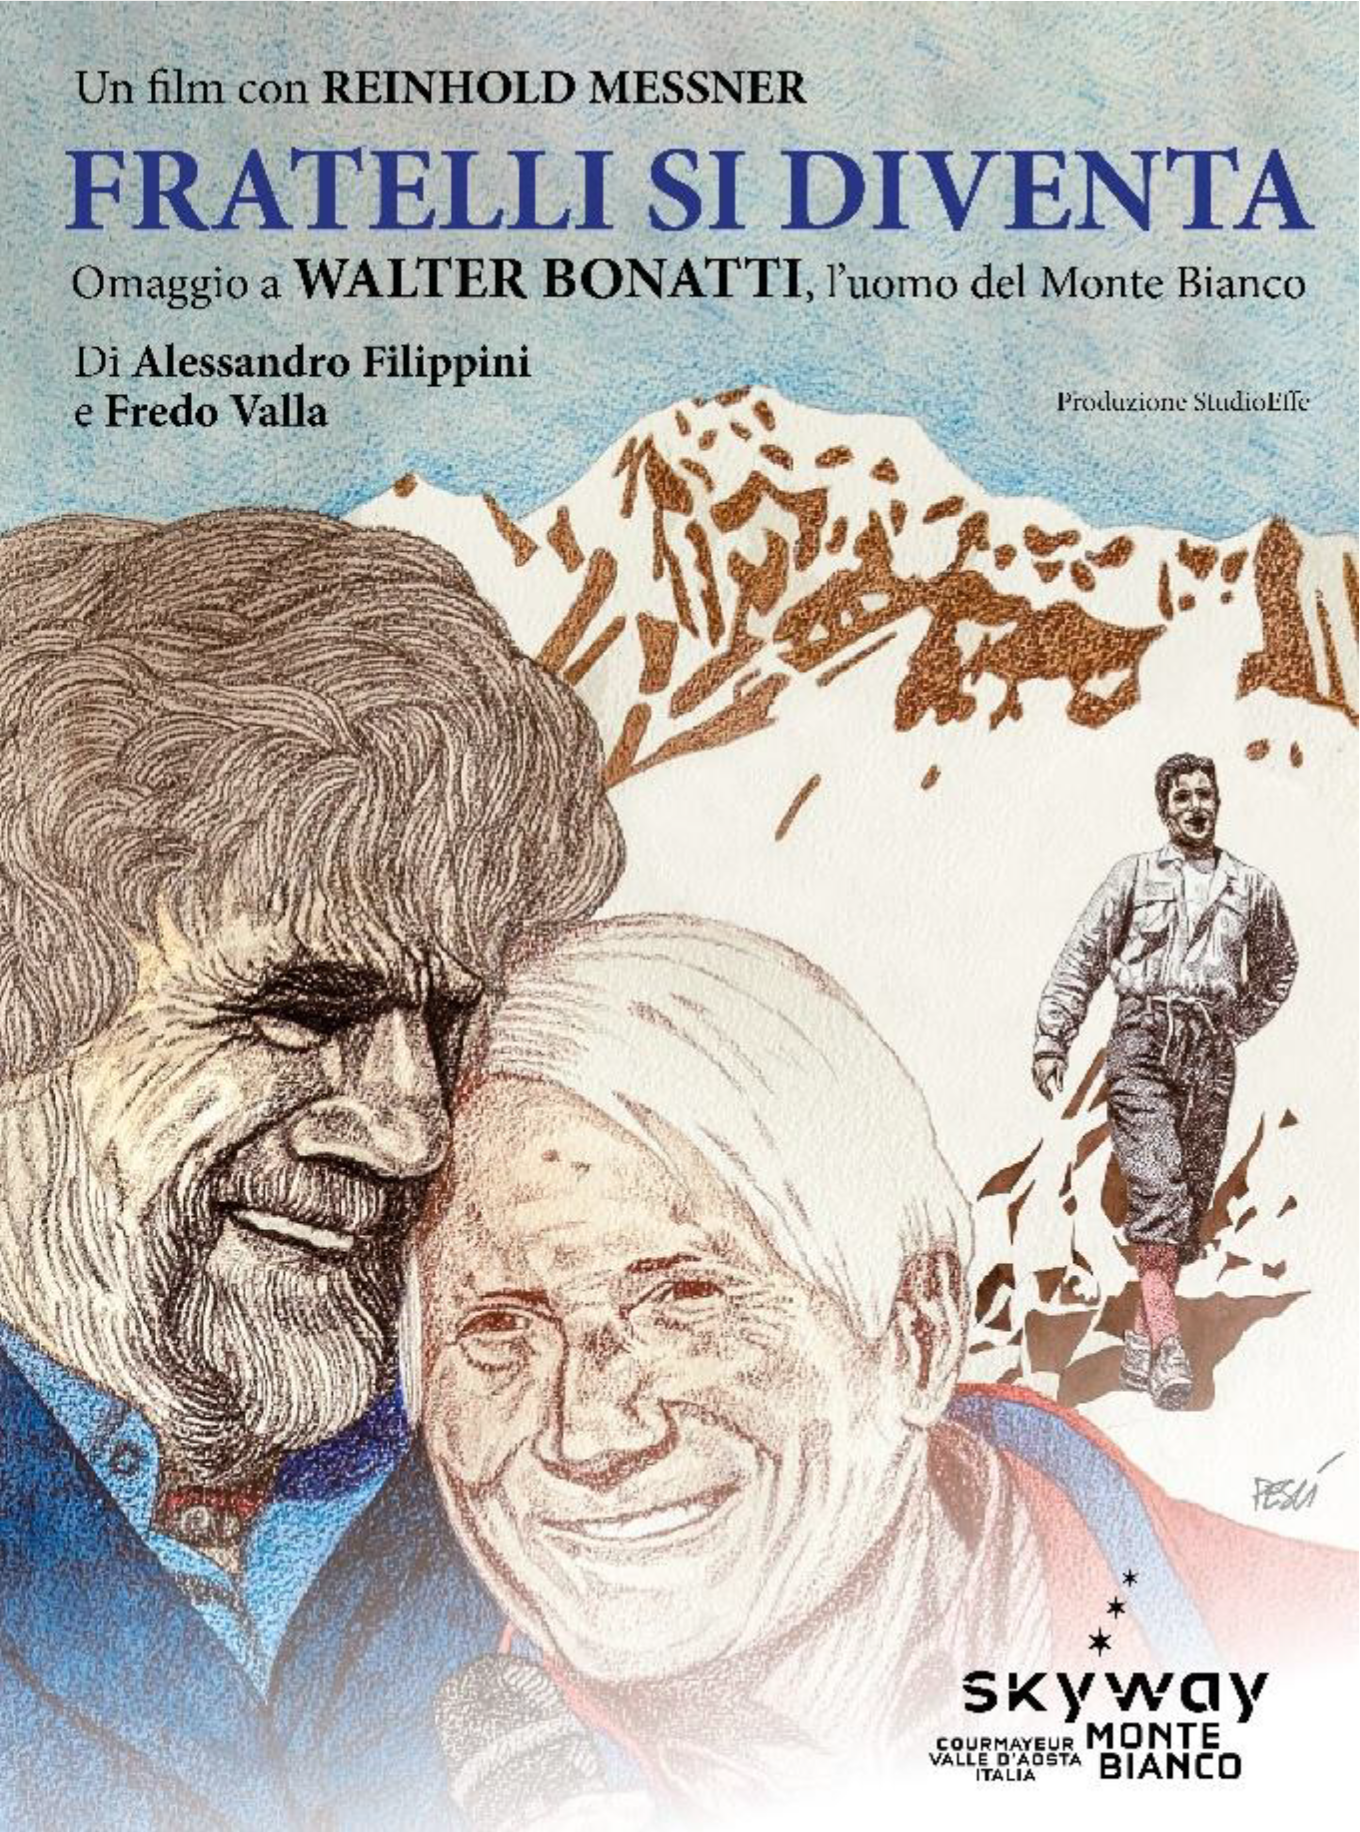 "Fratelli si diventa" - Bonatti - Messner